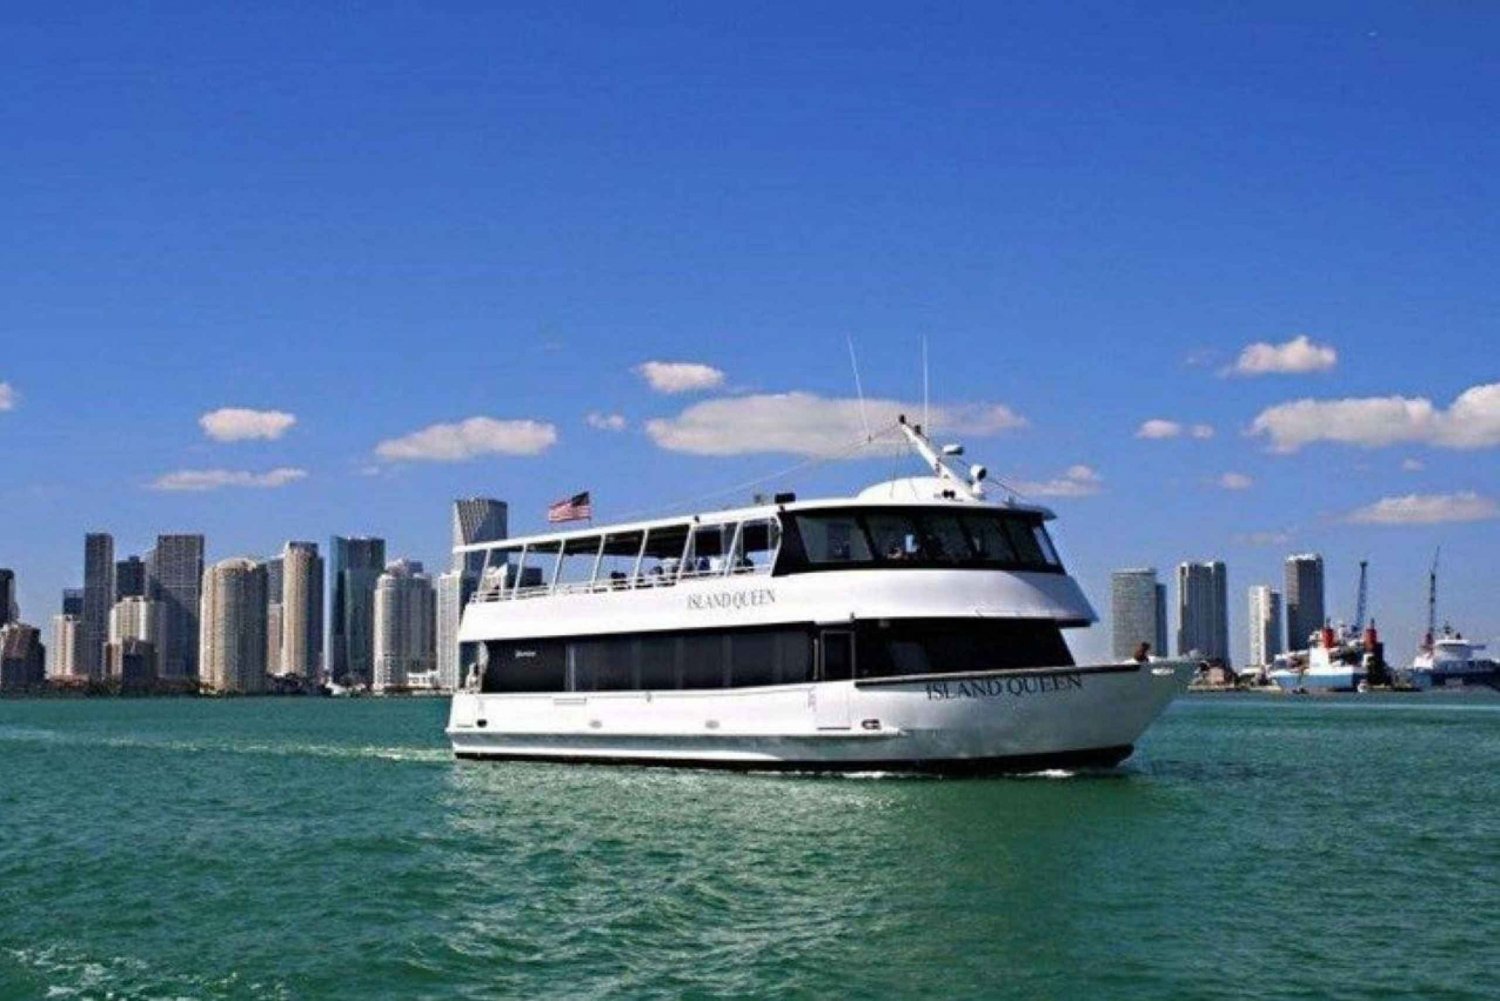 Miami: Biscayne Bay båtcruise med transport